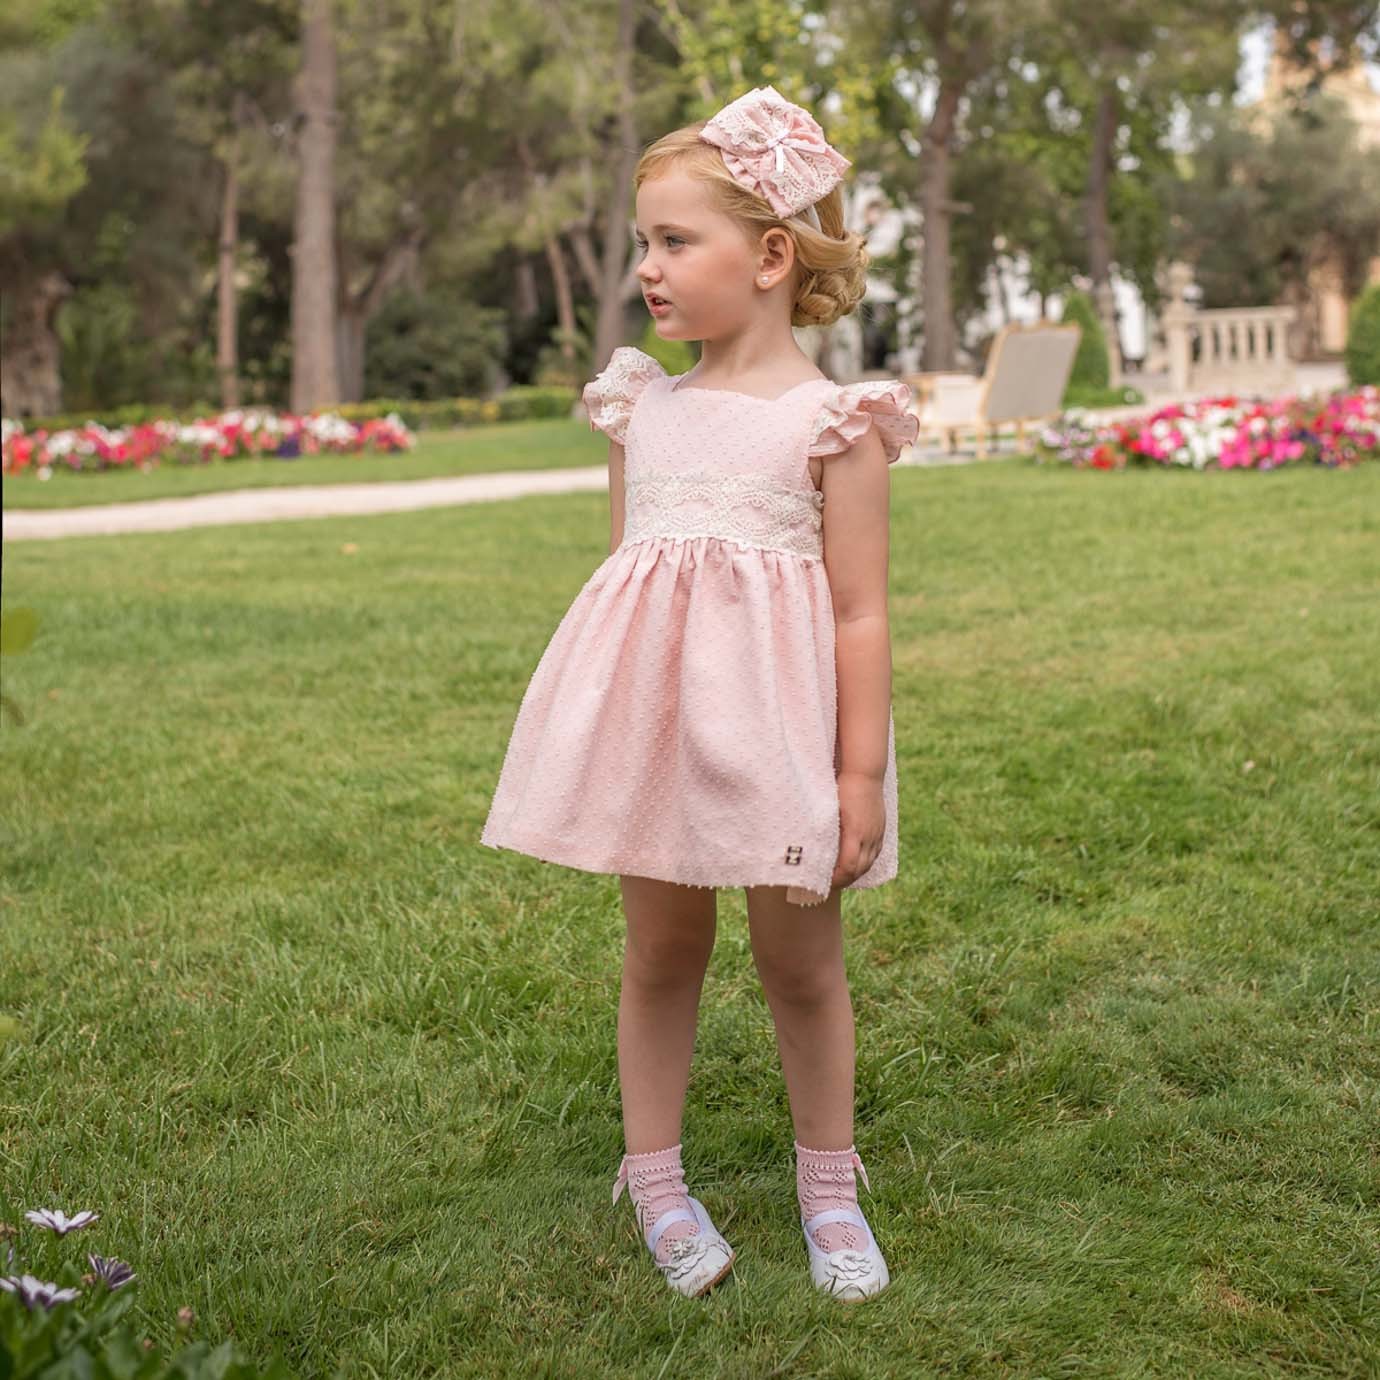 AdrielsModa Infantil on Twitter: "¡Vestidos para #niña de Dolce Petit - Vestido rosa palo para niña a 45,99 € disponible en https://t.co/eiJzOz3RDp https://t.co/zVOTWmX76n" / Twitter